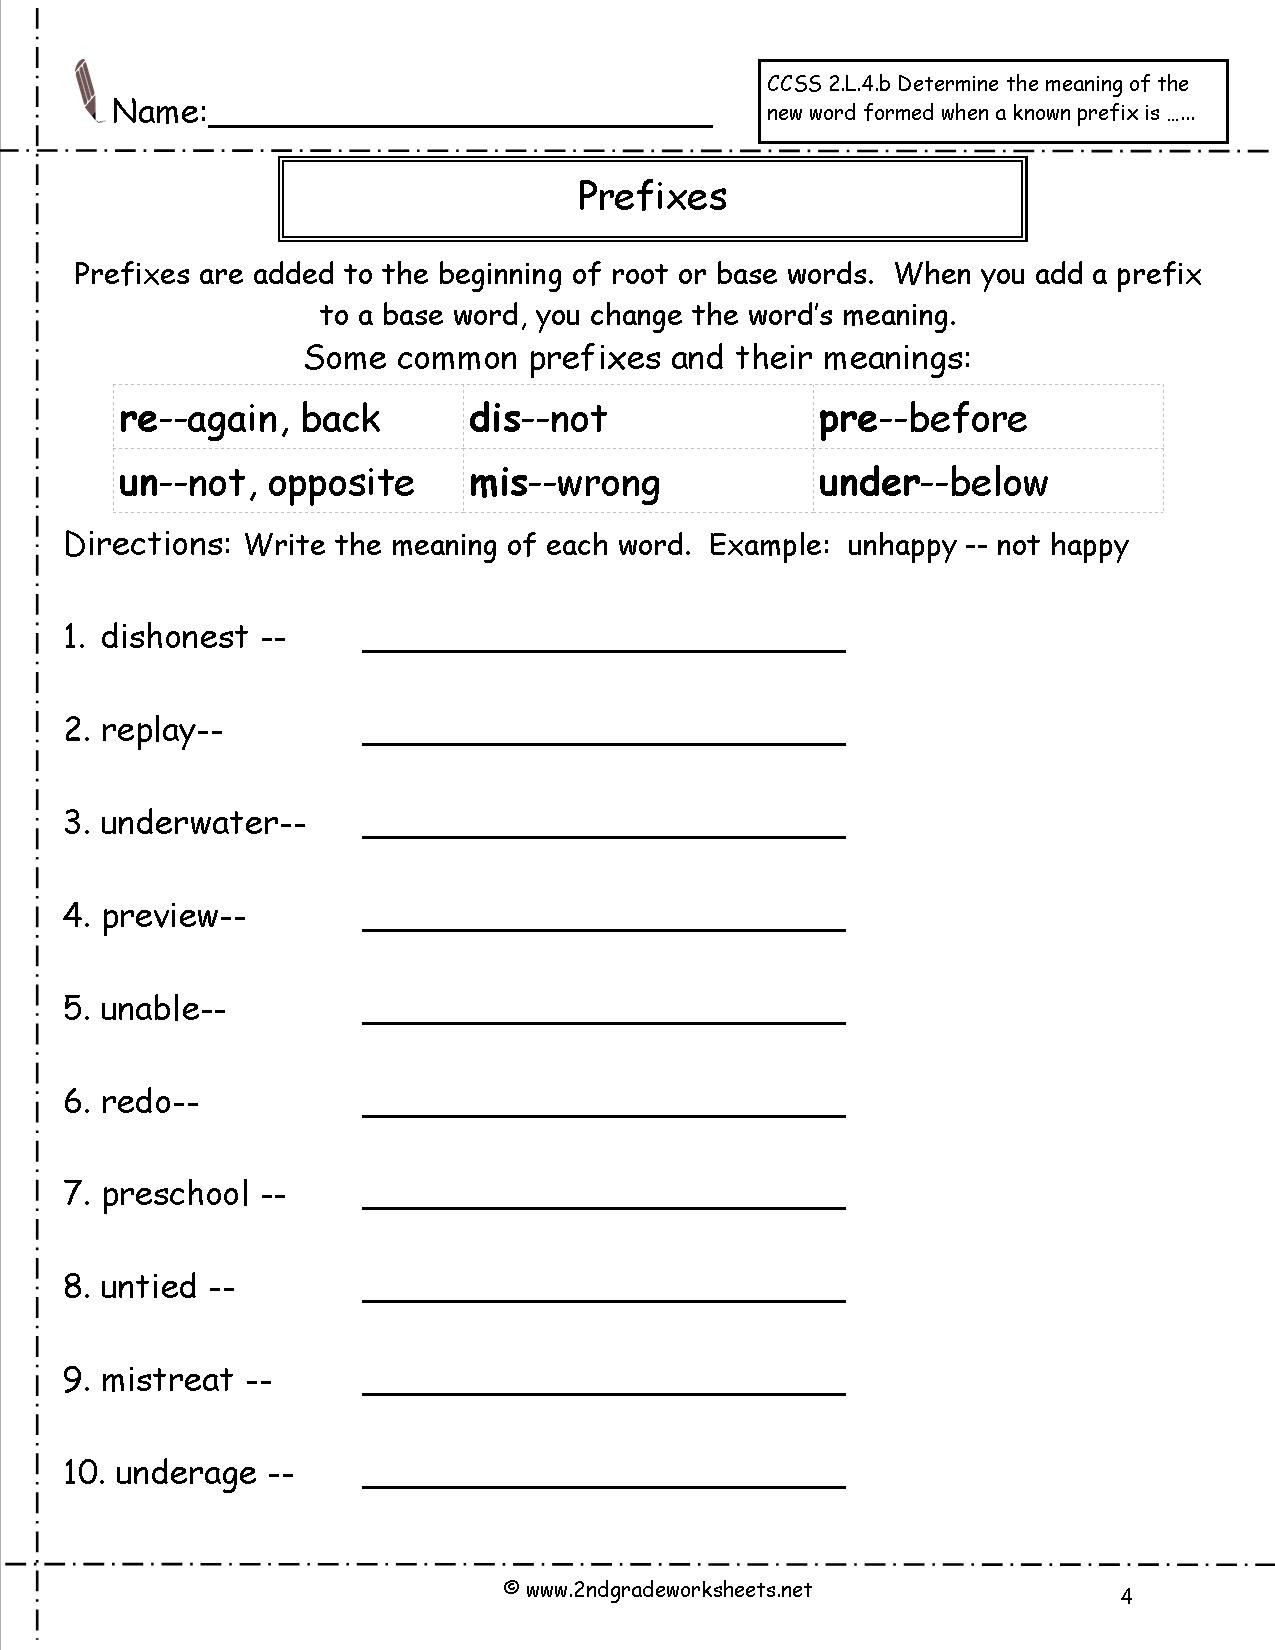 prefixes-and-suffixes-enchantedlearning-suffixes-worksheets